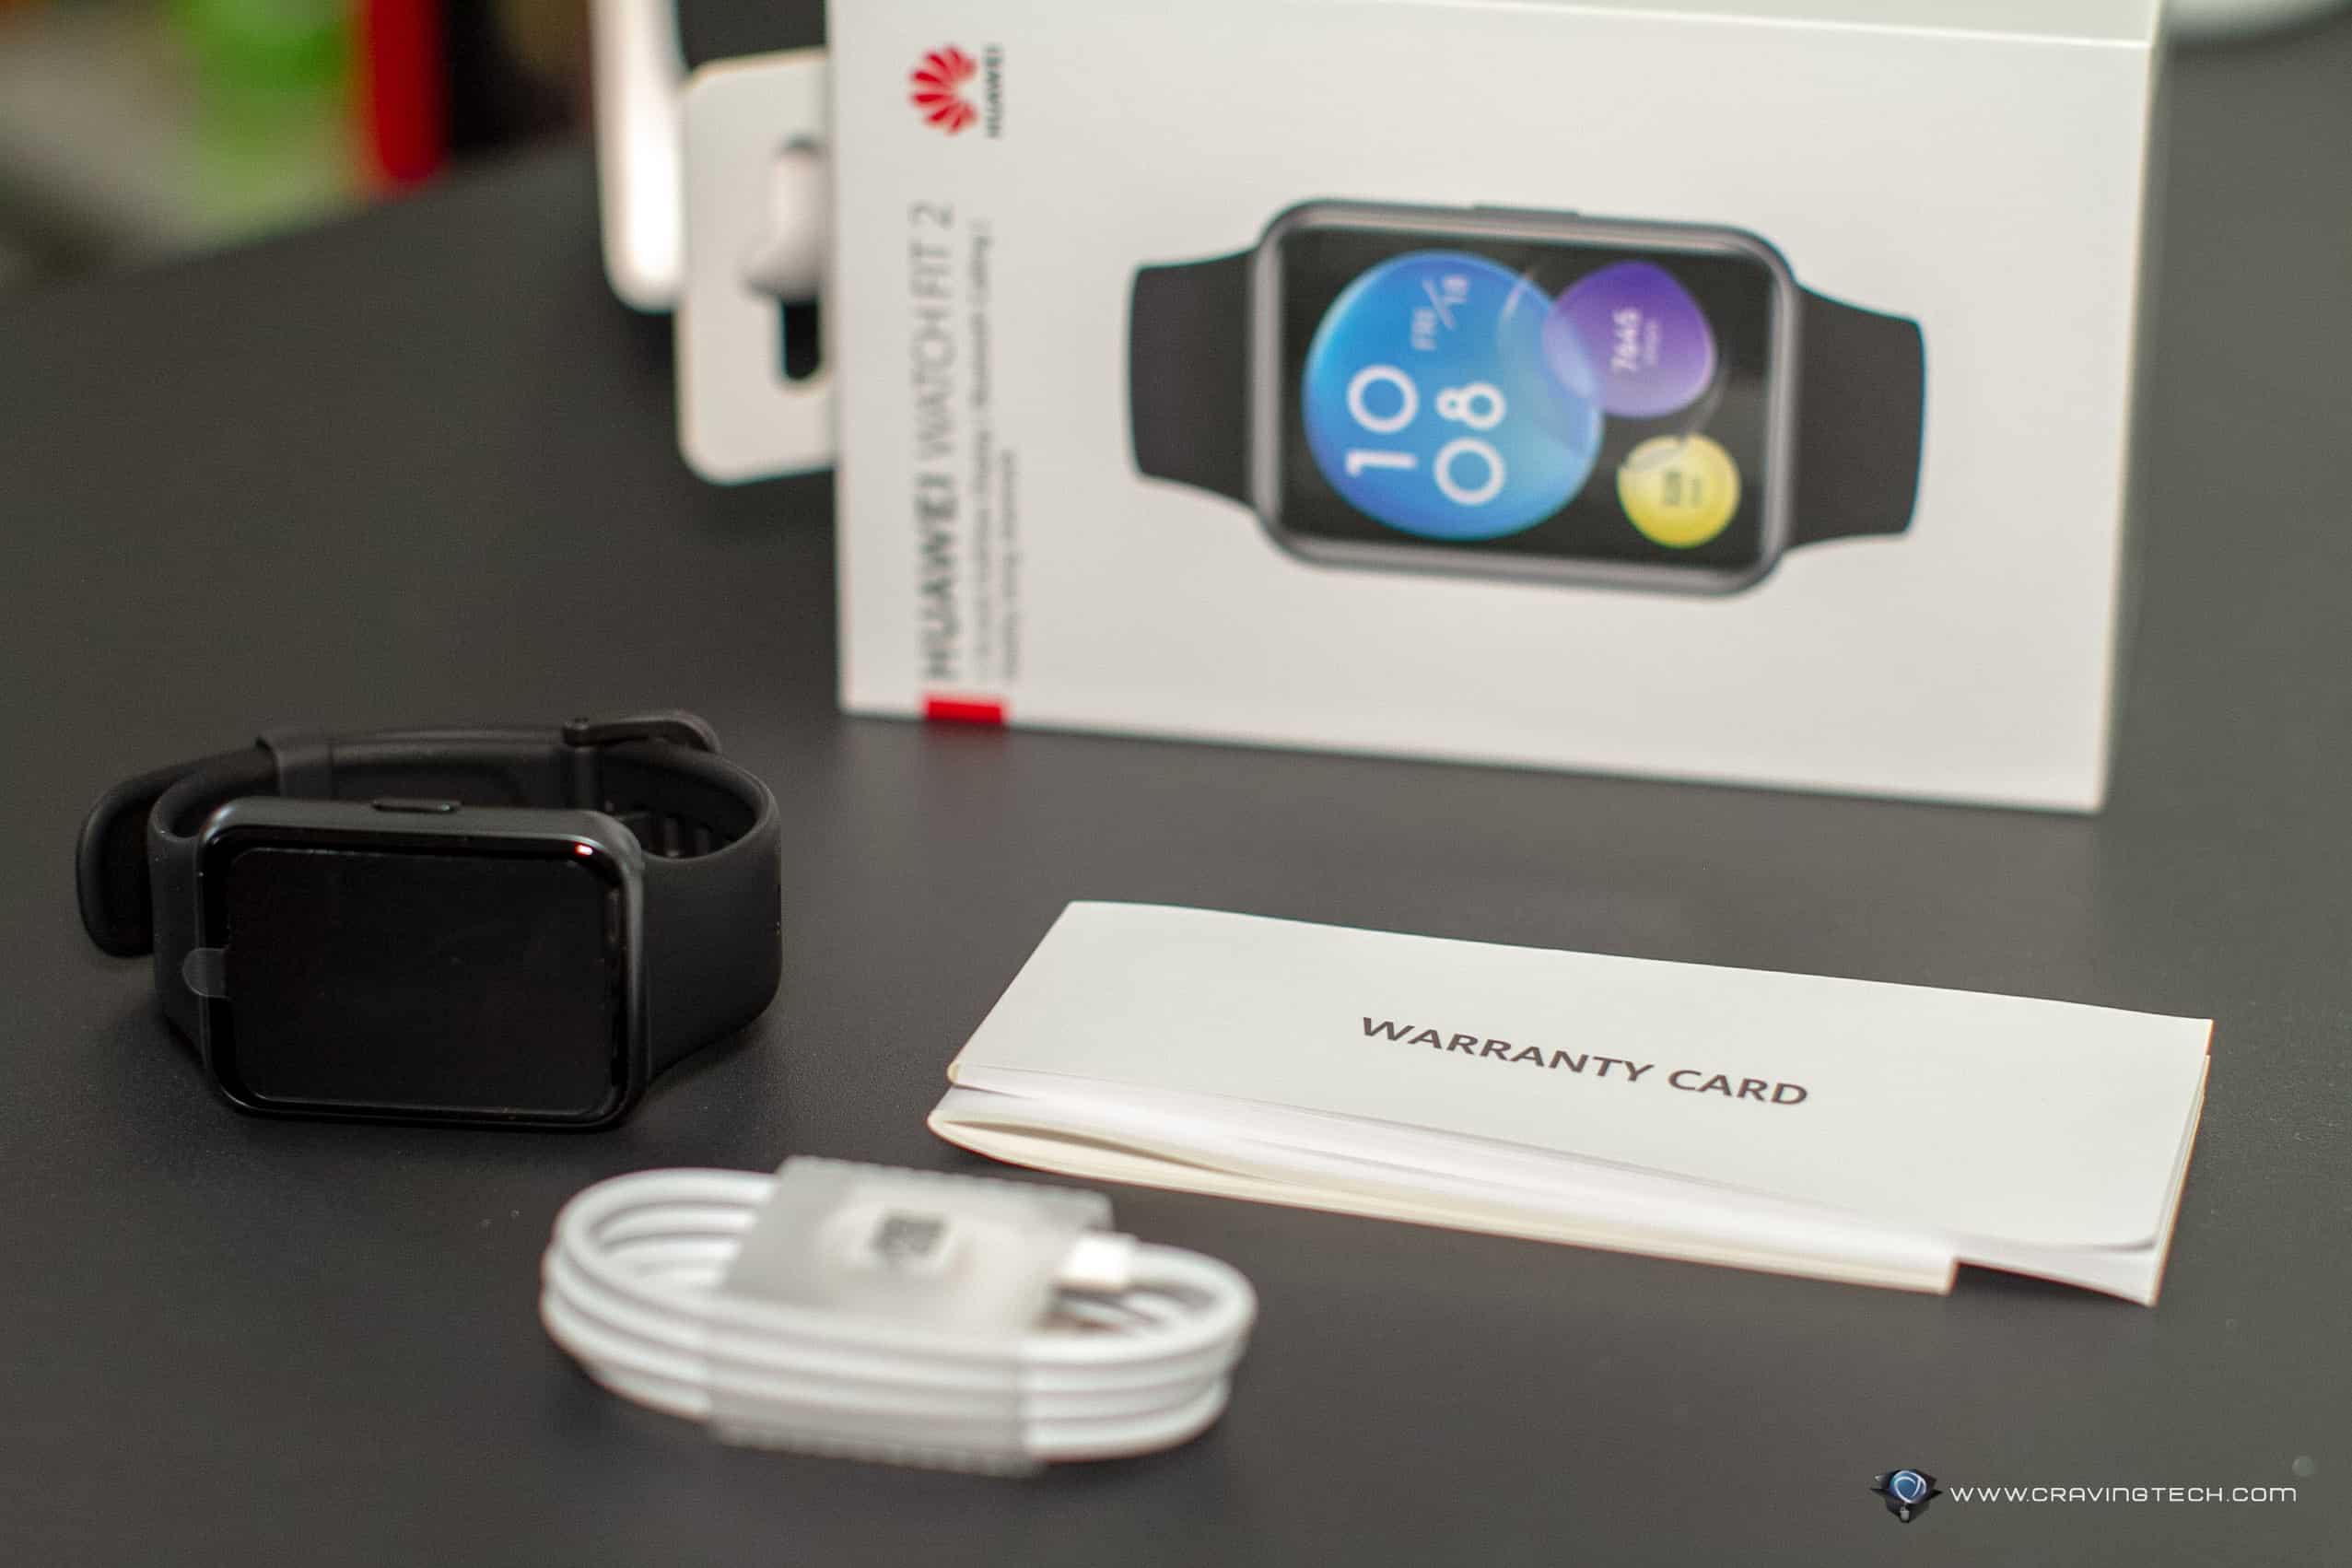 Review: Huawei Smartwatch Watch Fit 2